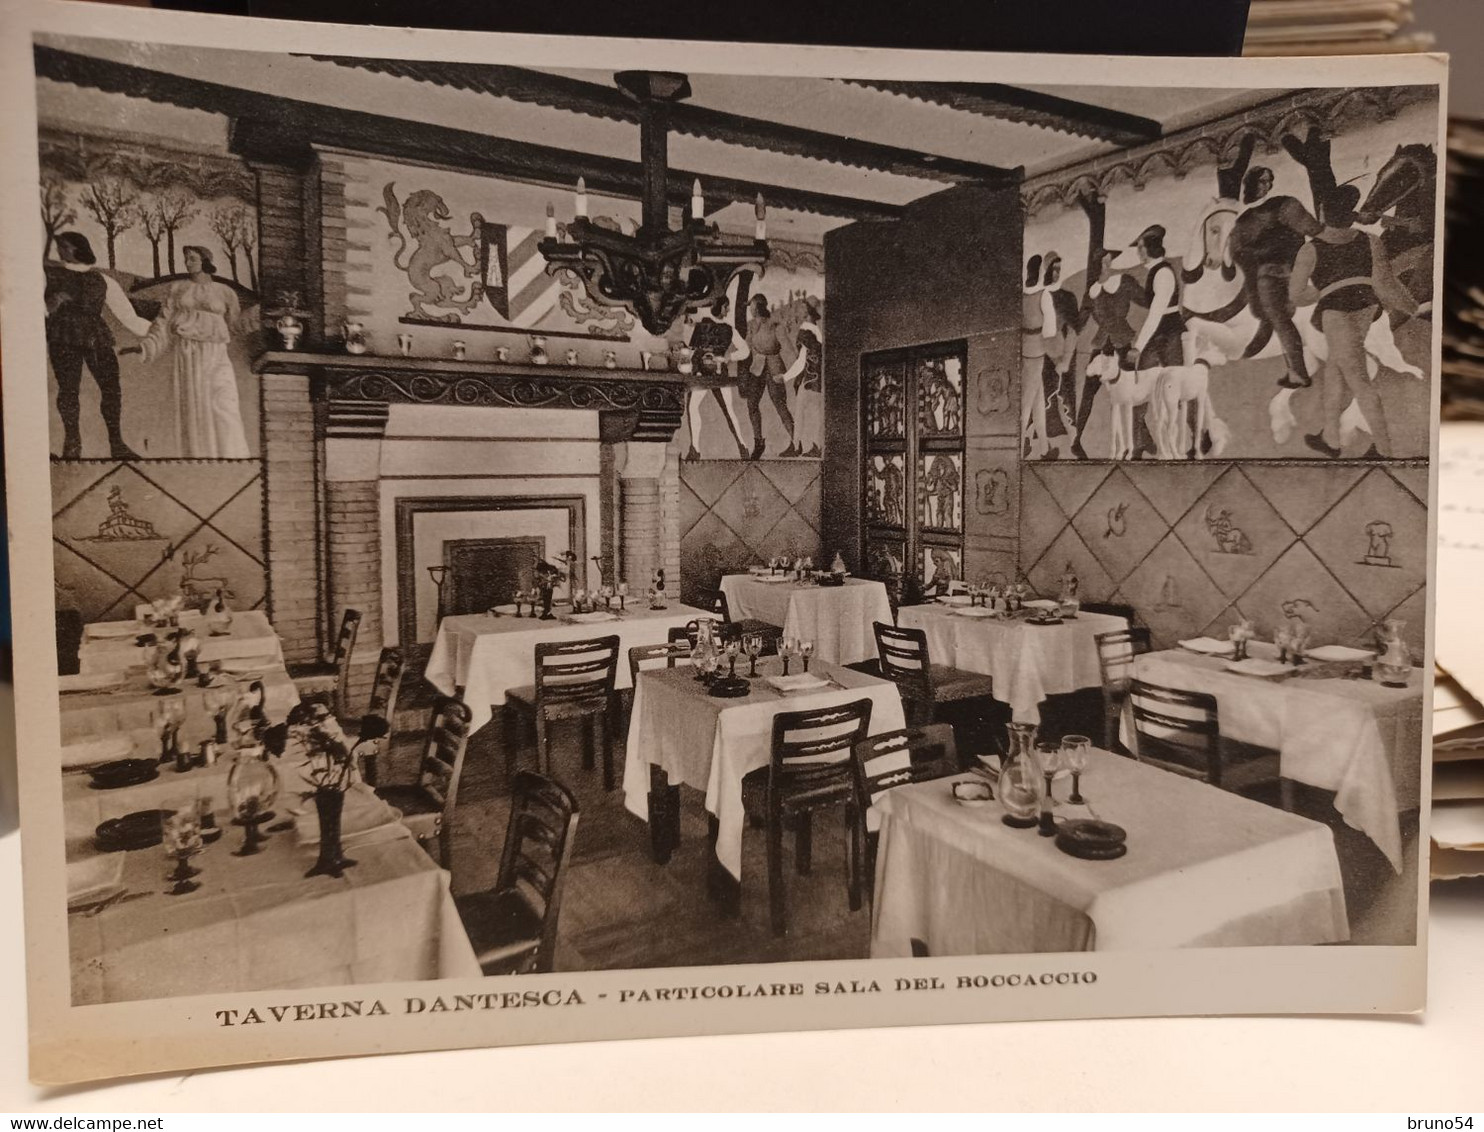 Cartolina Torino Taverna Dantesca Particolari Sala Del Boccaccio Via Nizza 5 ,1939 - Bares, Hoteles Y Restaurantes